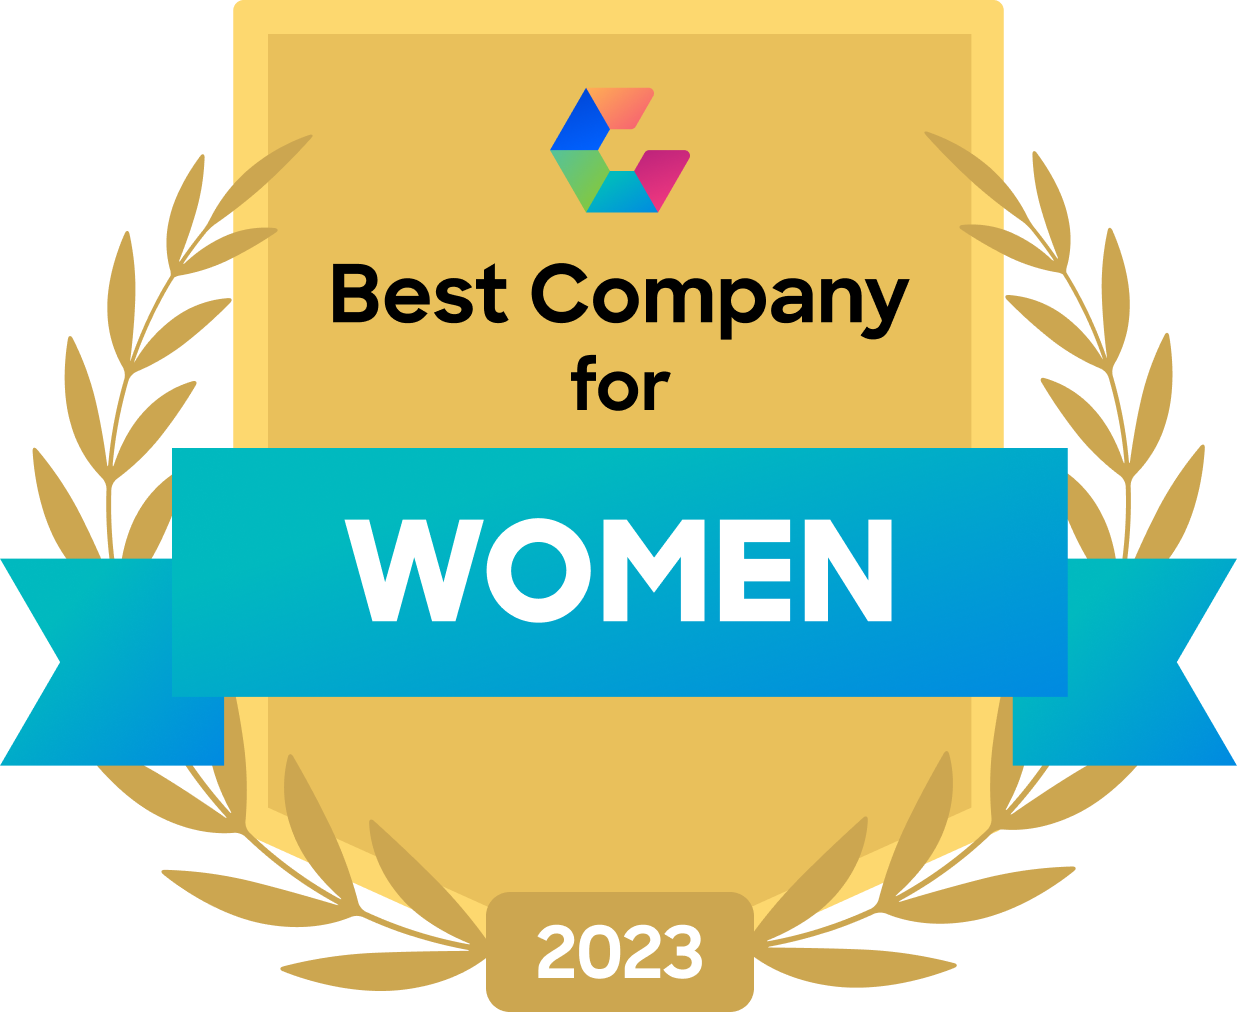 Best Company for Women 2023